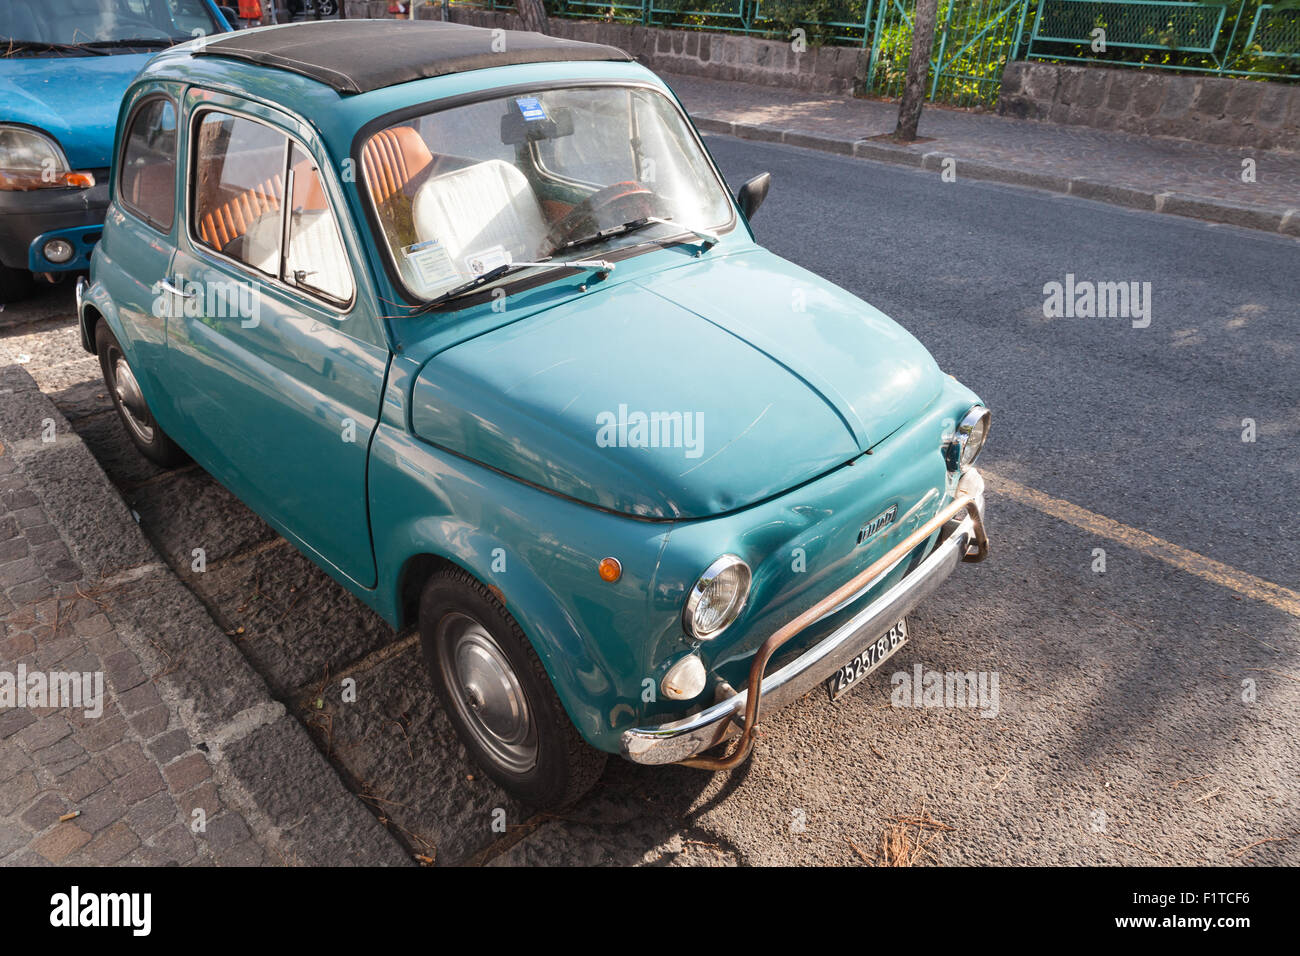 Ischia, Italia - 15 de agosto de 2015: Fiat 500 viejo verde city car está estacionada en carretera urbana Foto de stock